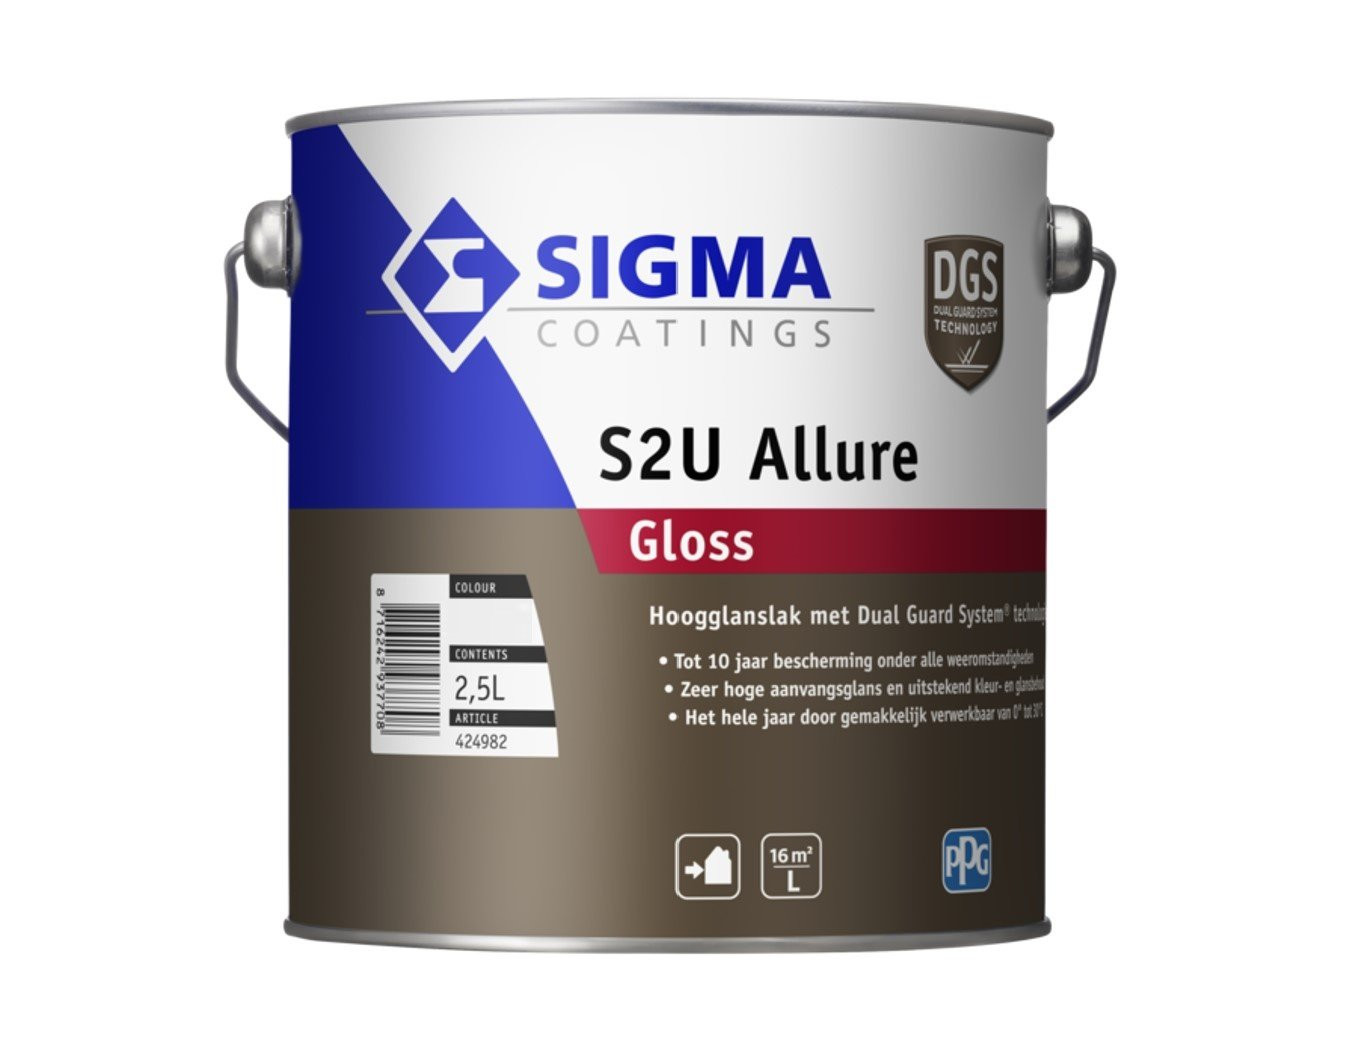 Sigma S2U Allure Gloss 2.5 liter Q0.05.10